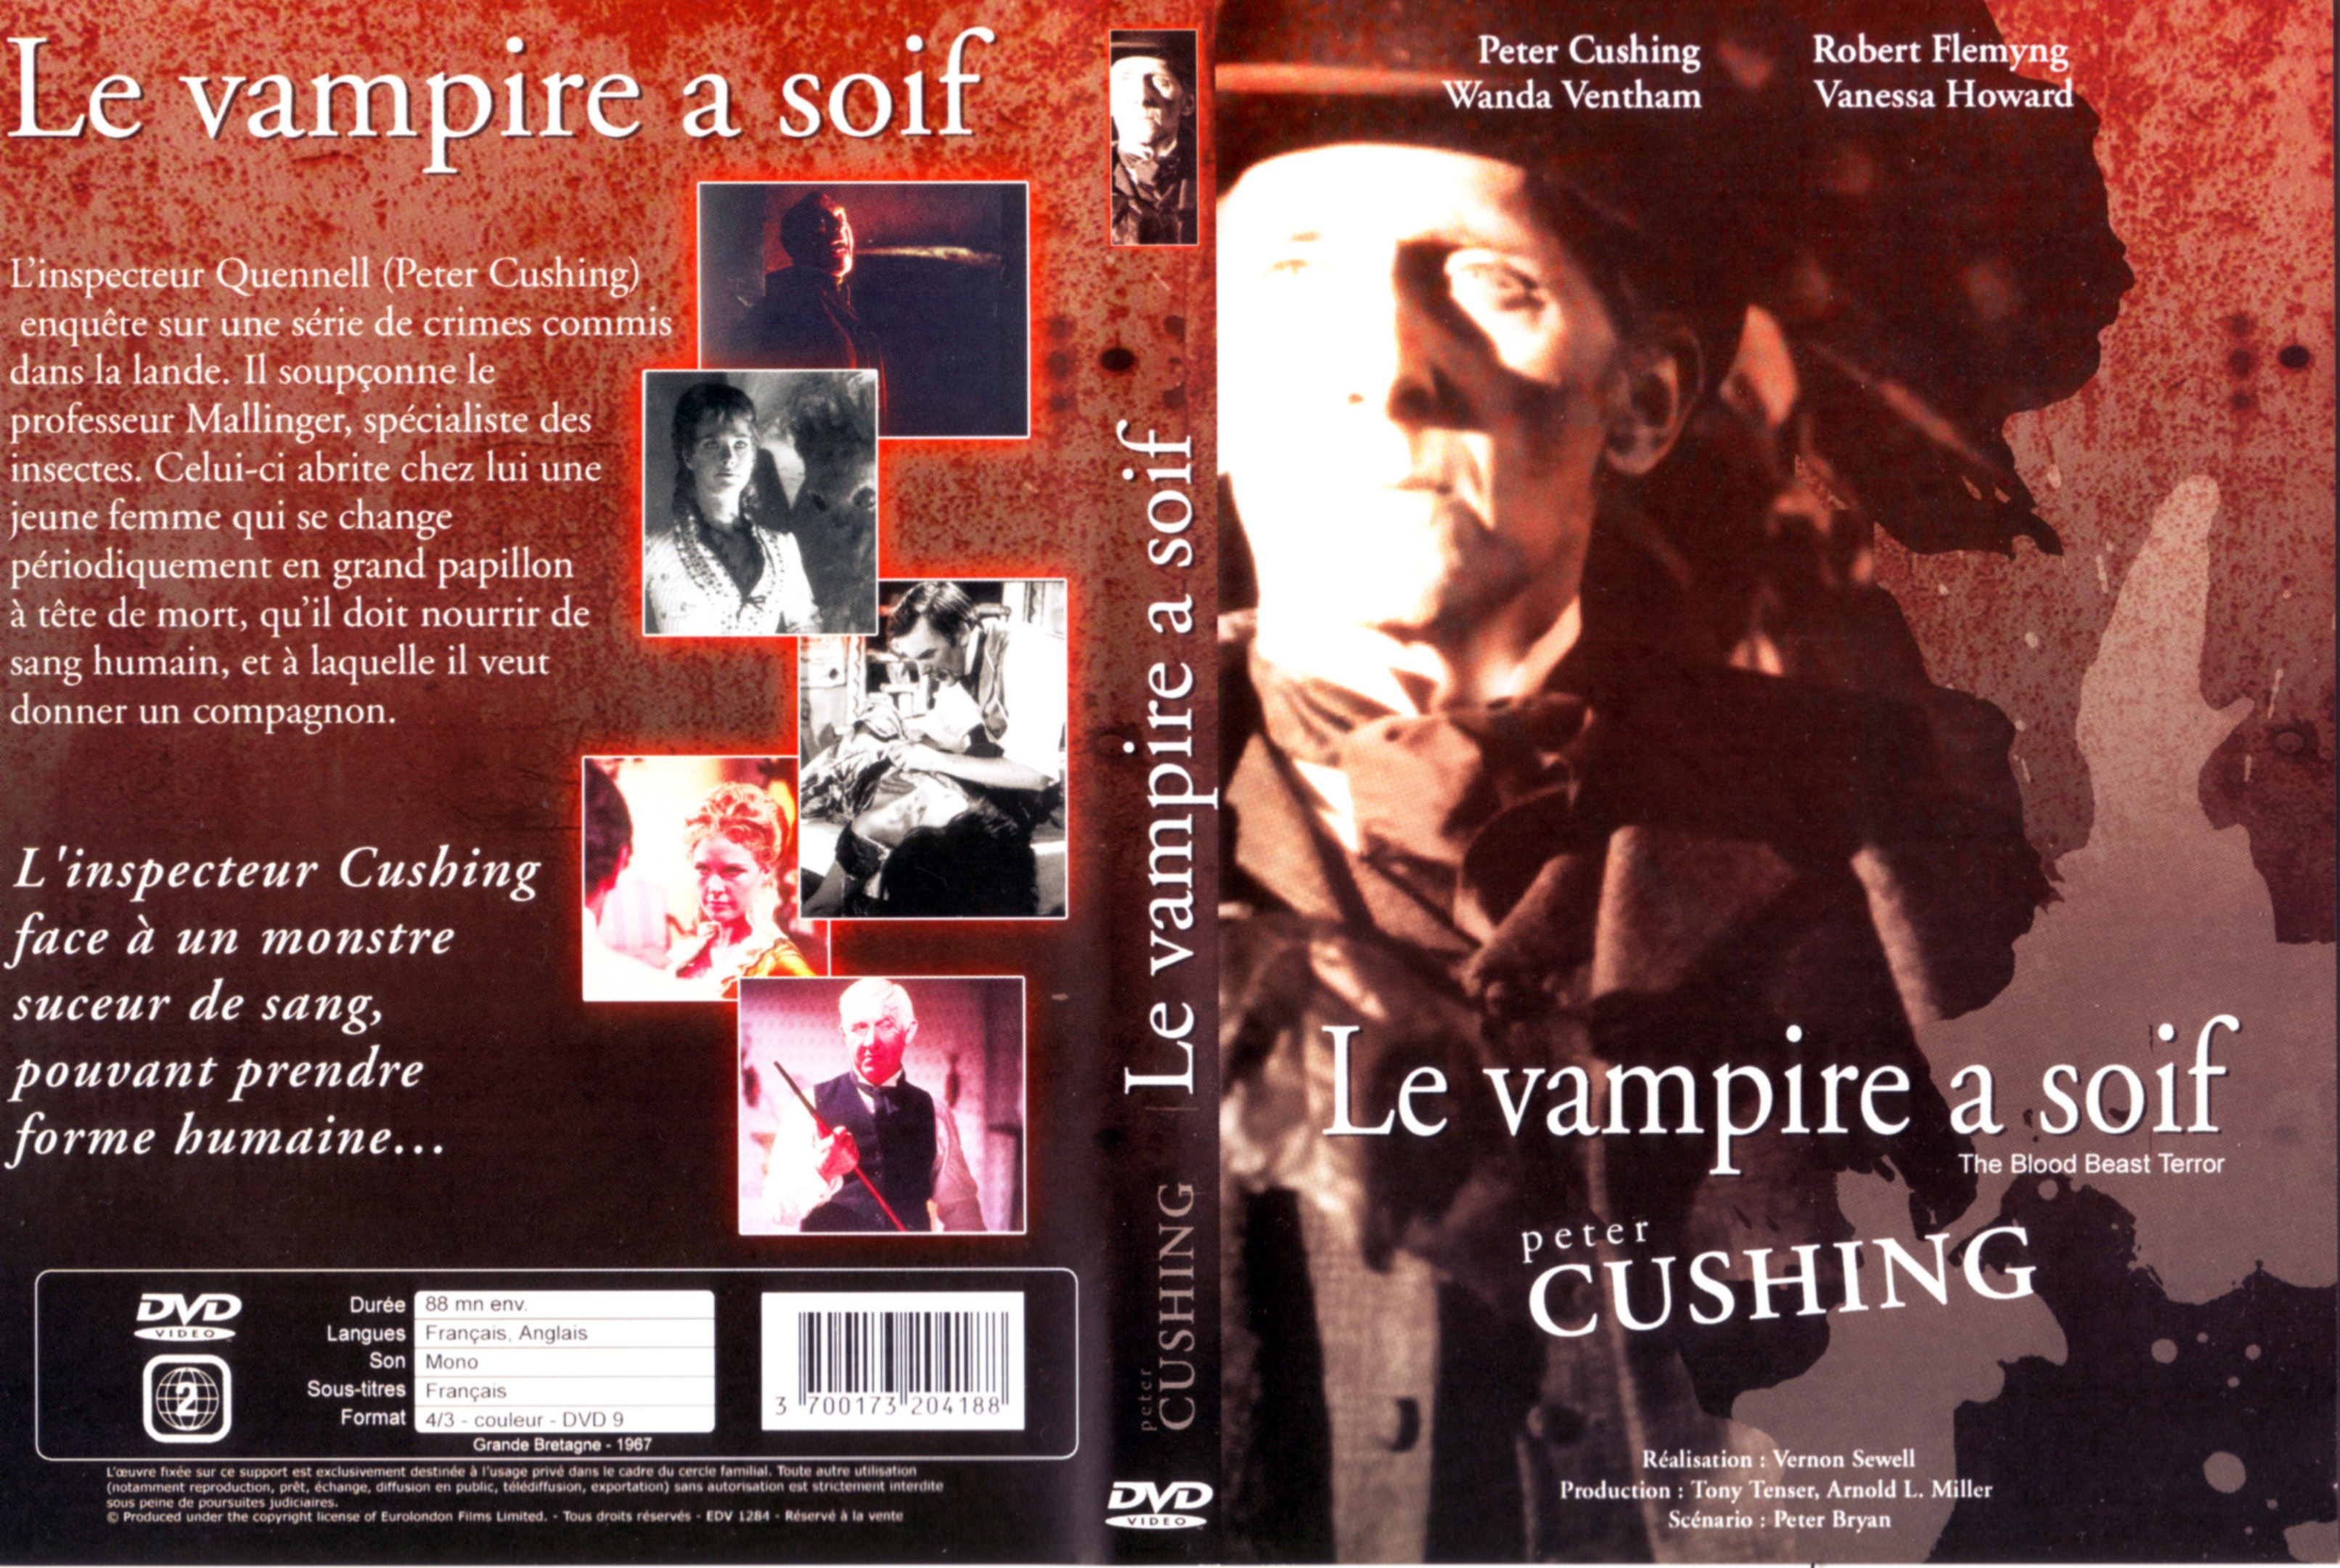 Jaquette DVD Le vampire a soif